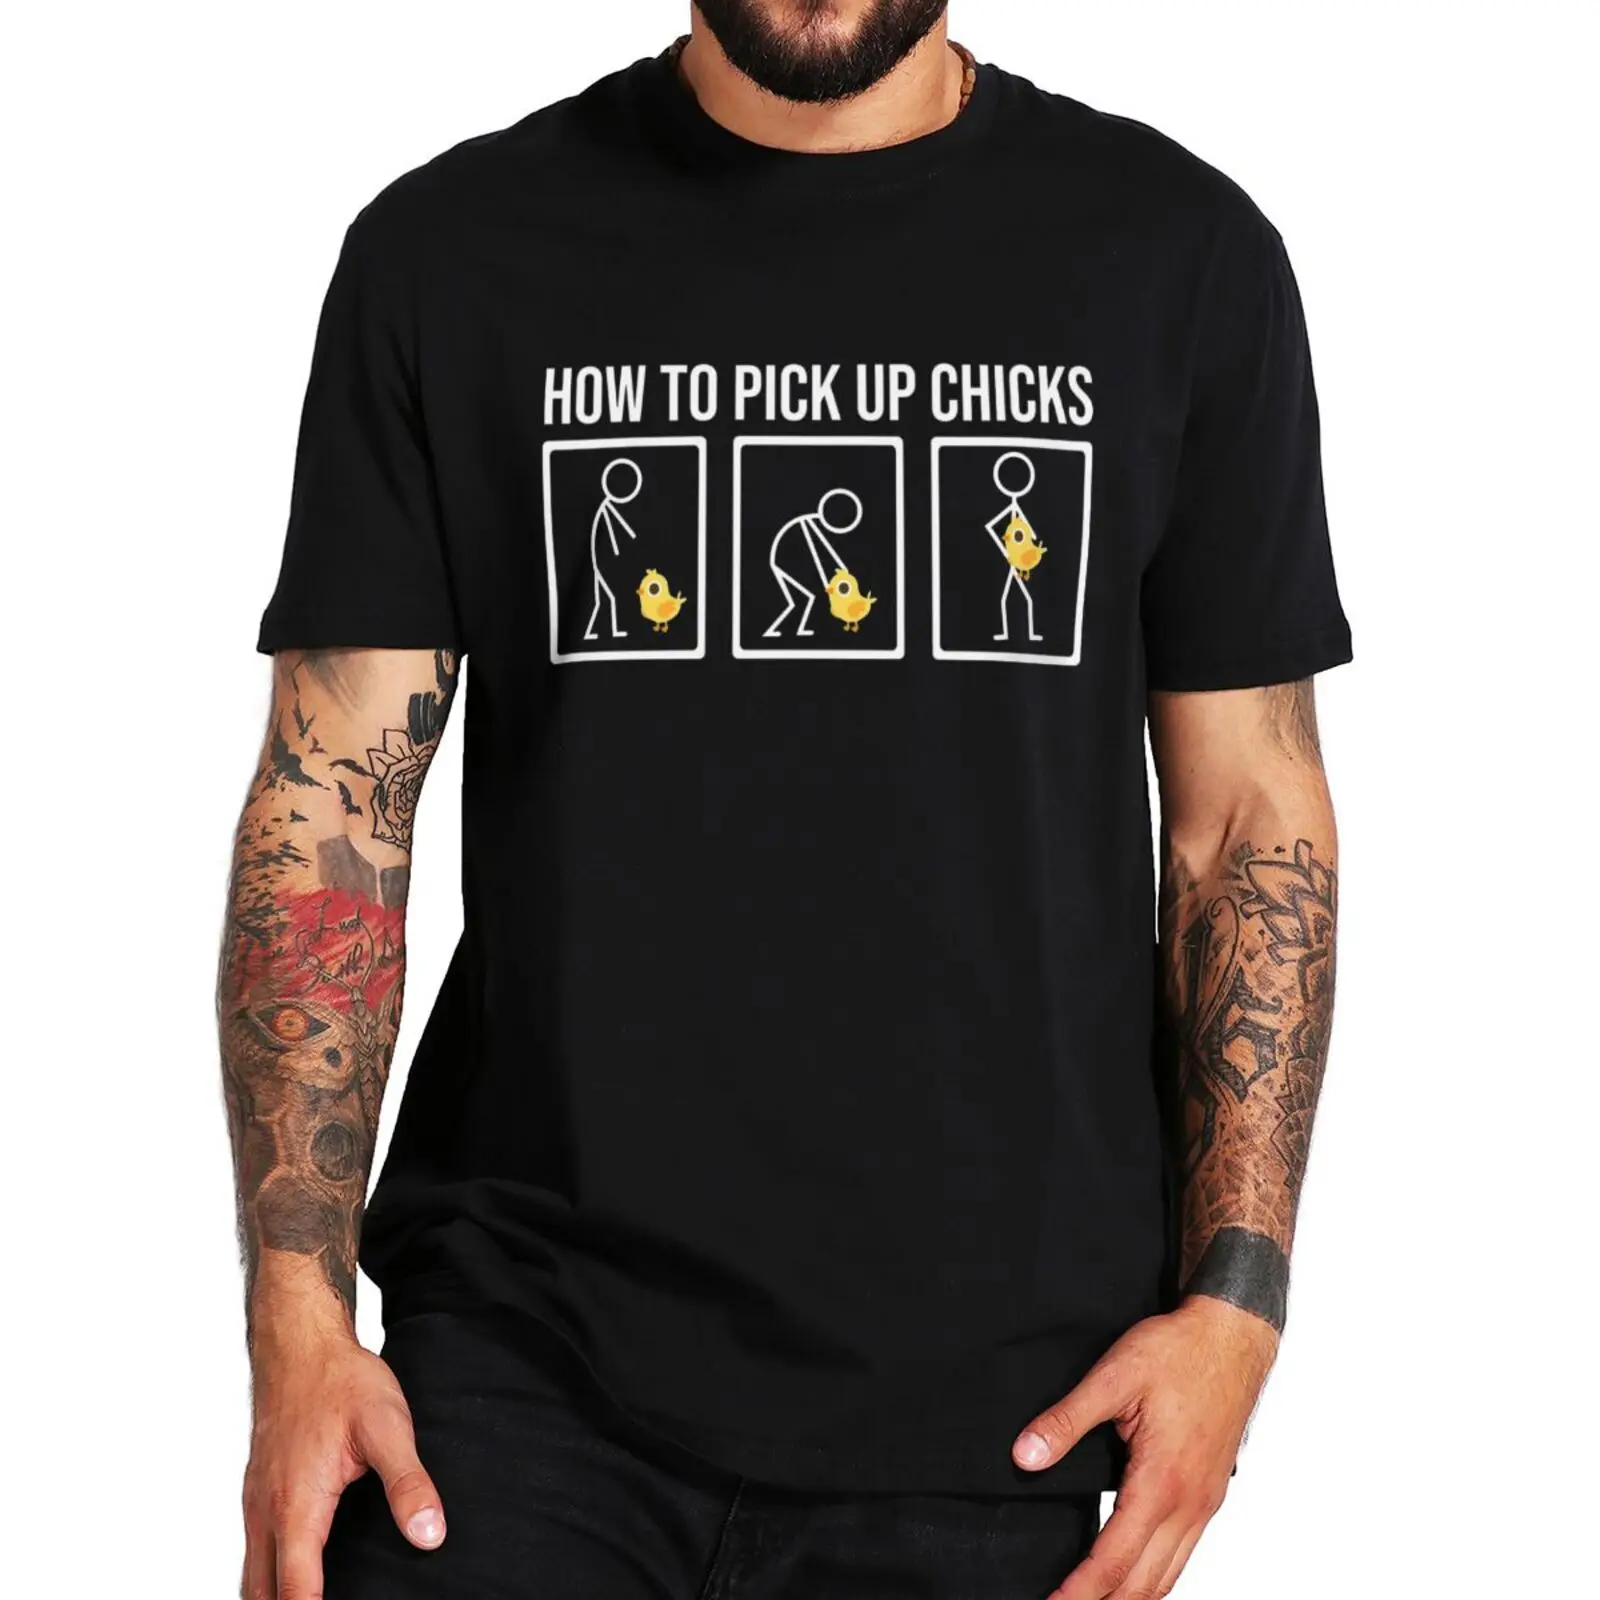 

How To Pick Up Chicks T-Shirt Funny Man Jokes Puns Geek Humor Short Sleeve Summer Cotton Casual Soft T Shirt For Men EU Size